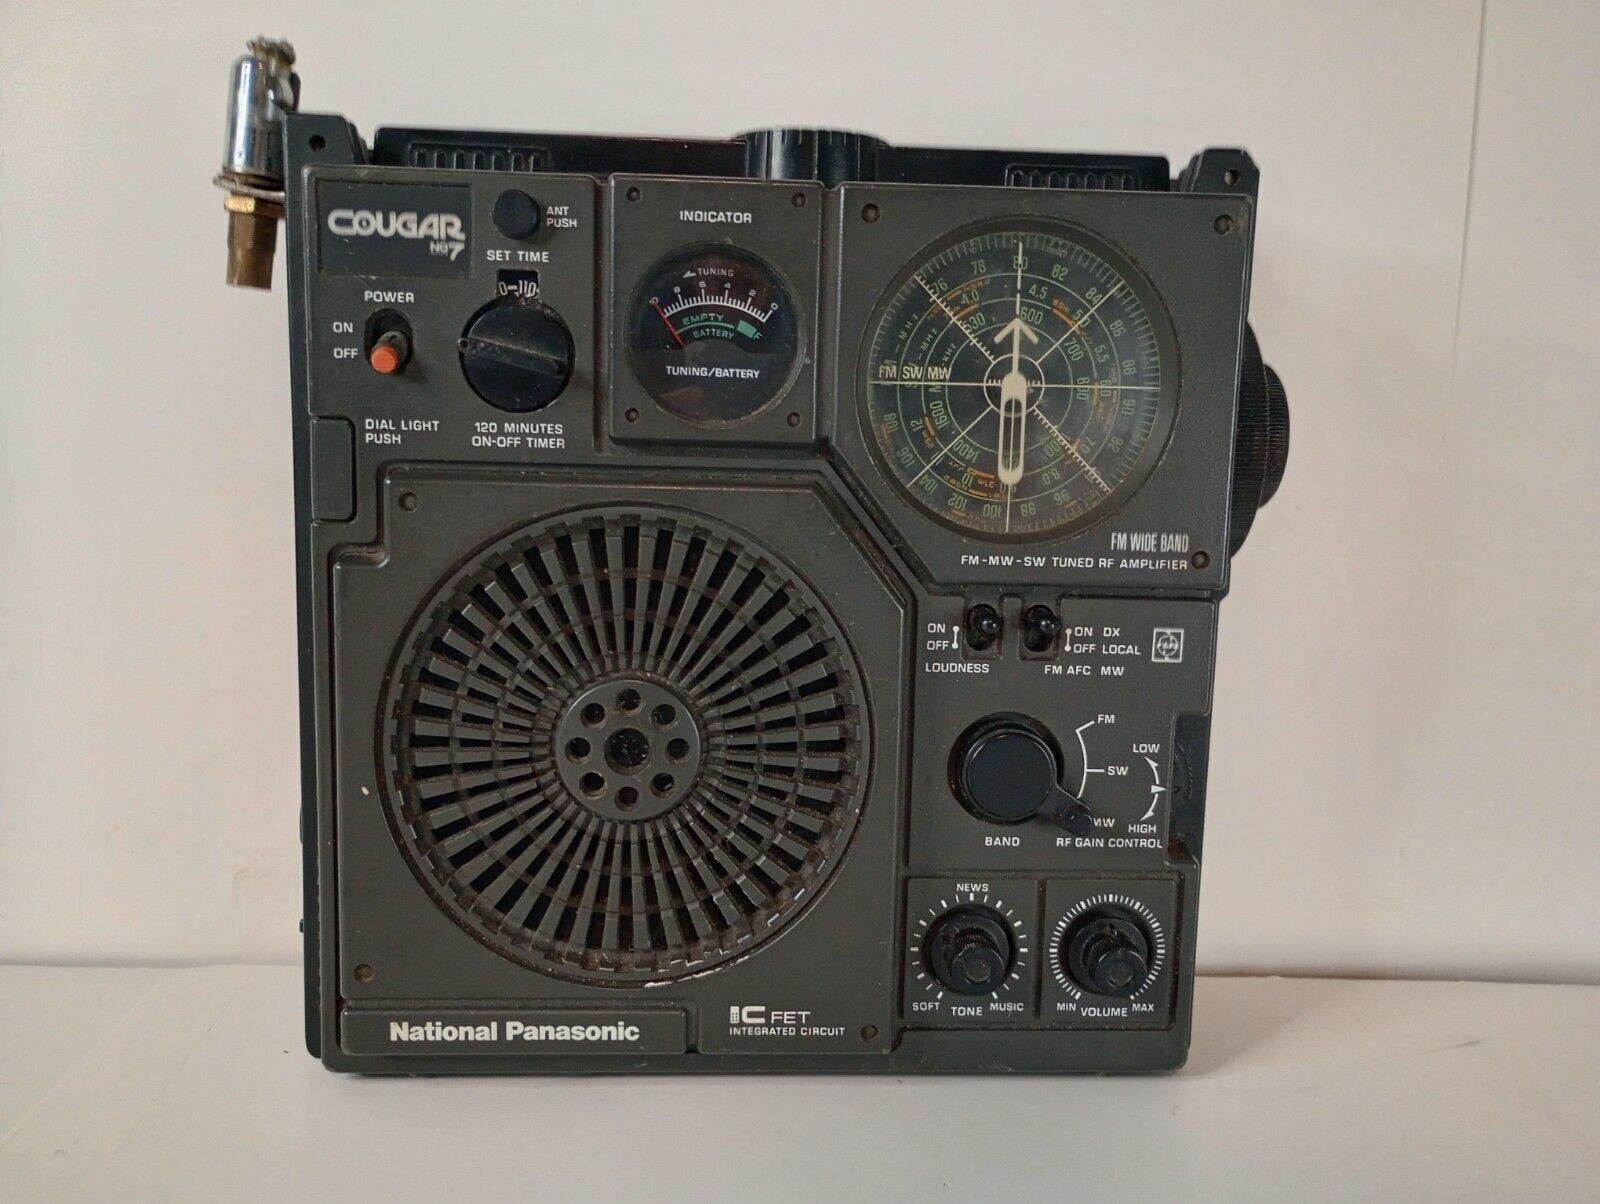 National Panasonic Cougar NO.7 RF-877 Fm/am 3 Band Vintage Radio 